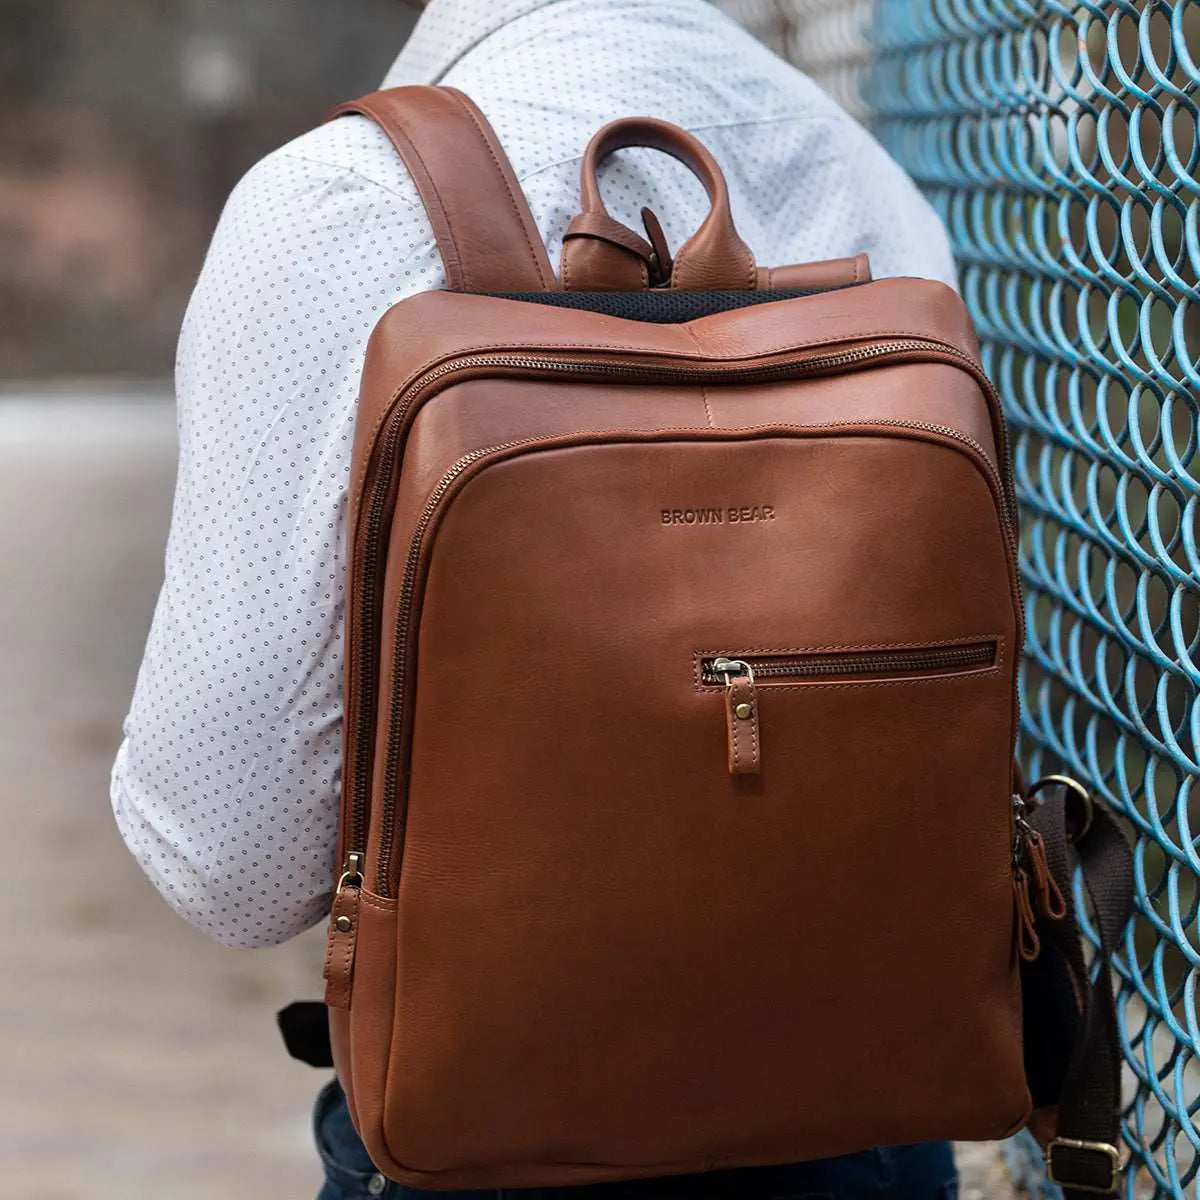 BOSTANTEN Genuine Leather Backpack Purse 15.6 inch Laptop Backpack Fashion  Casual College Shoulder Bag Travel Backpack